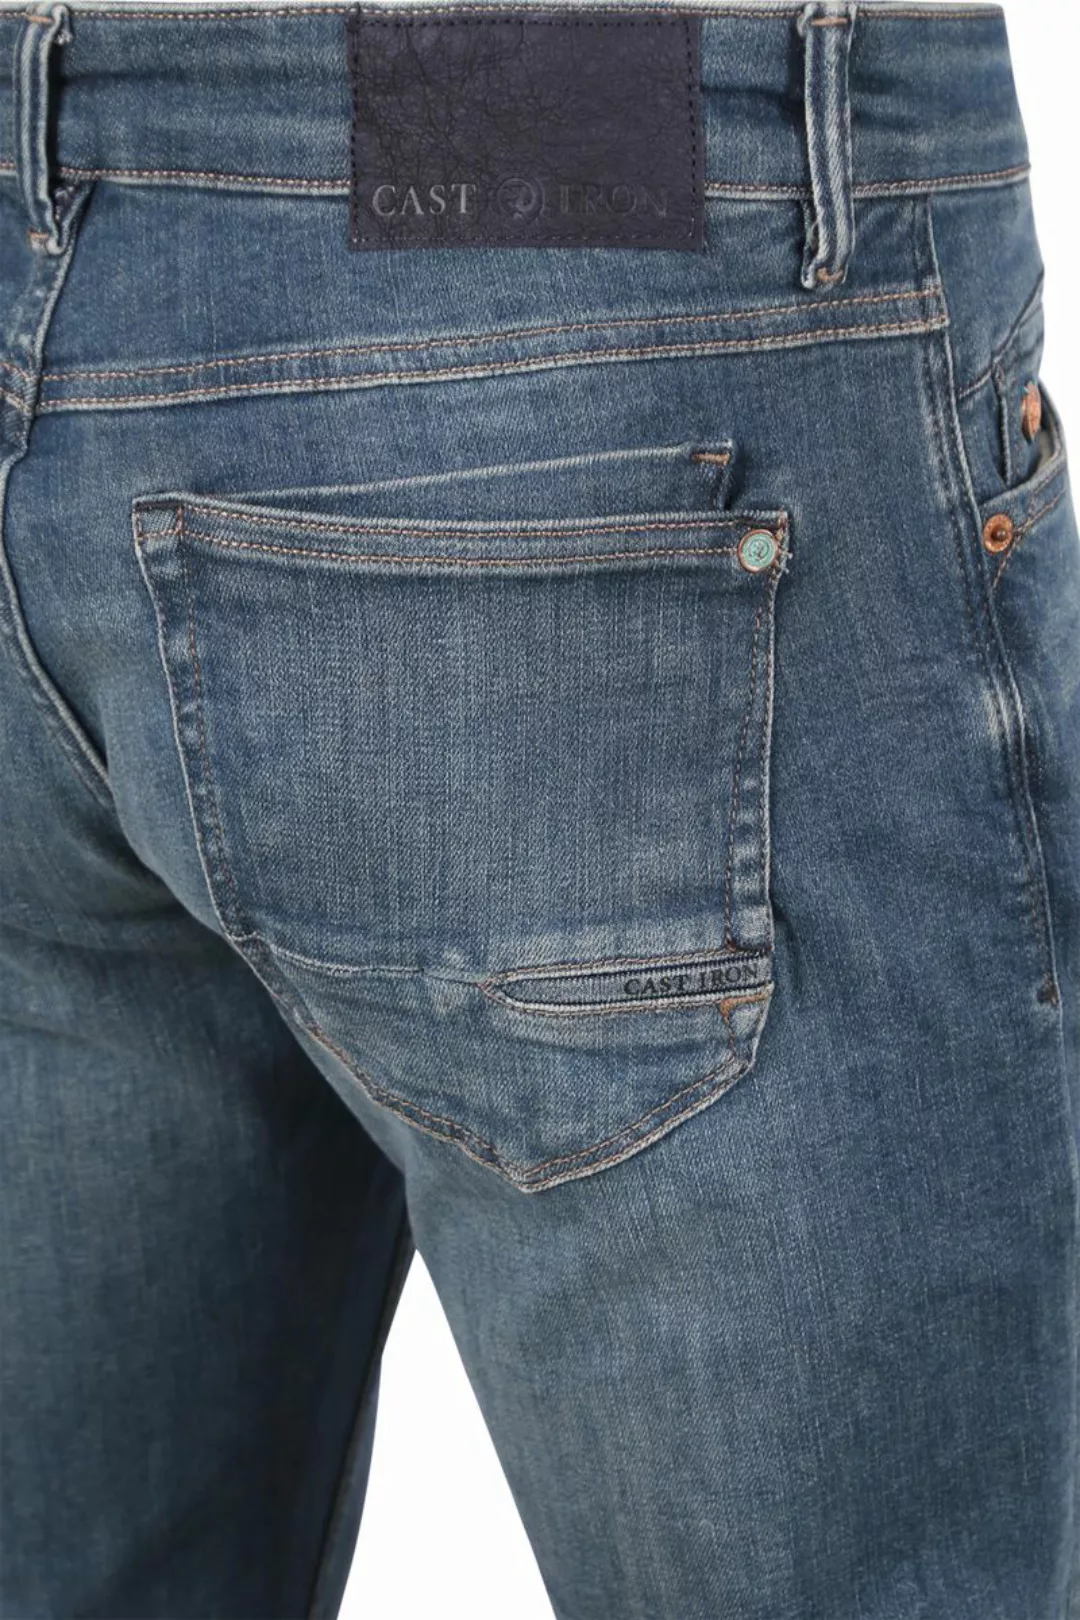 Cast Iron Shiftback Jeans Blau NBD - Größe W 33 - L 34 günstig online kaufen